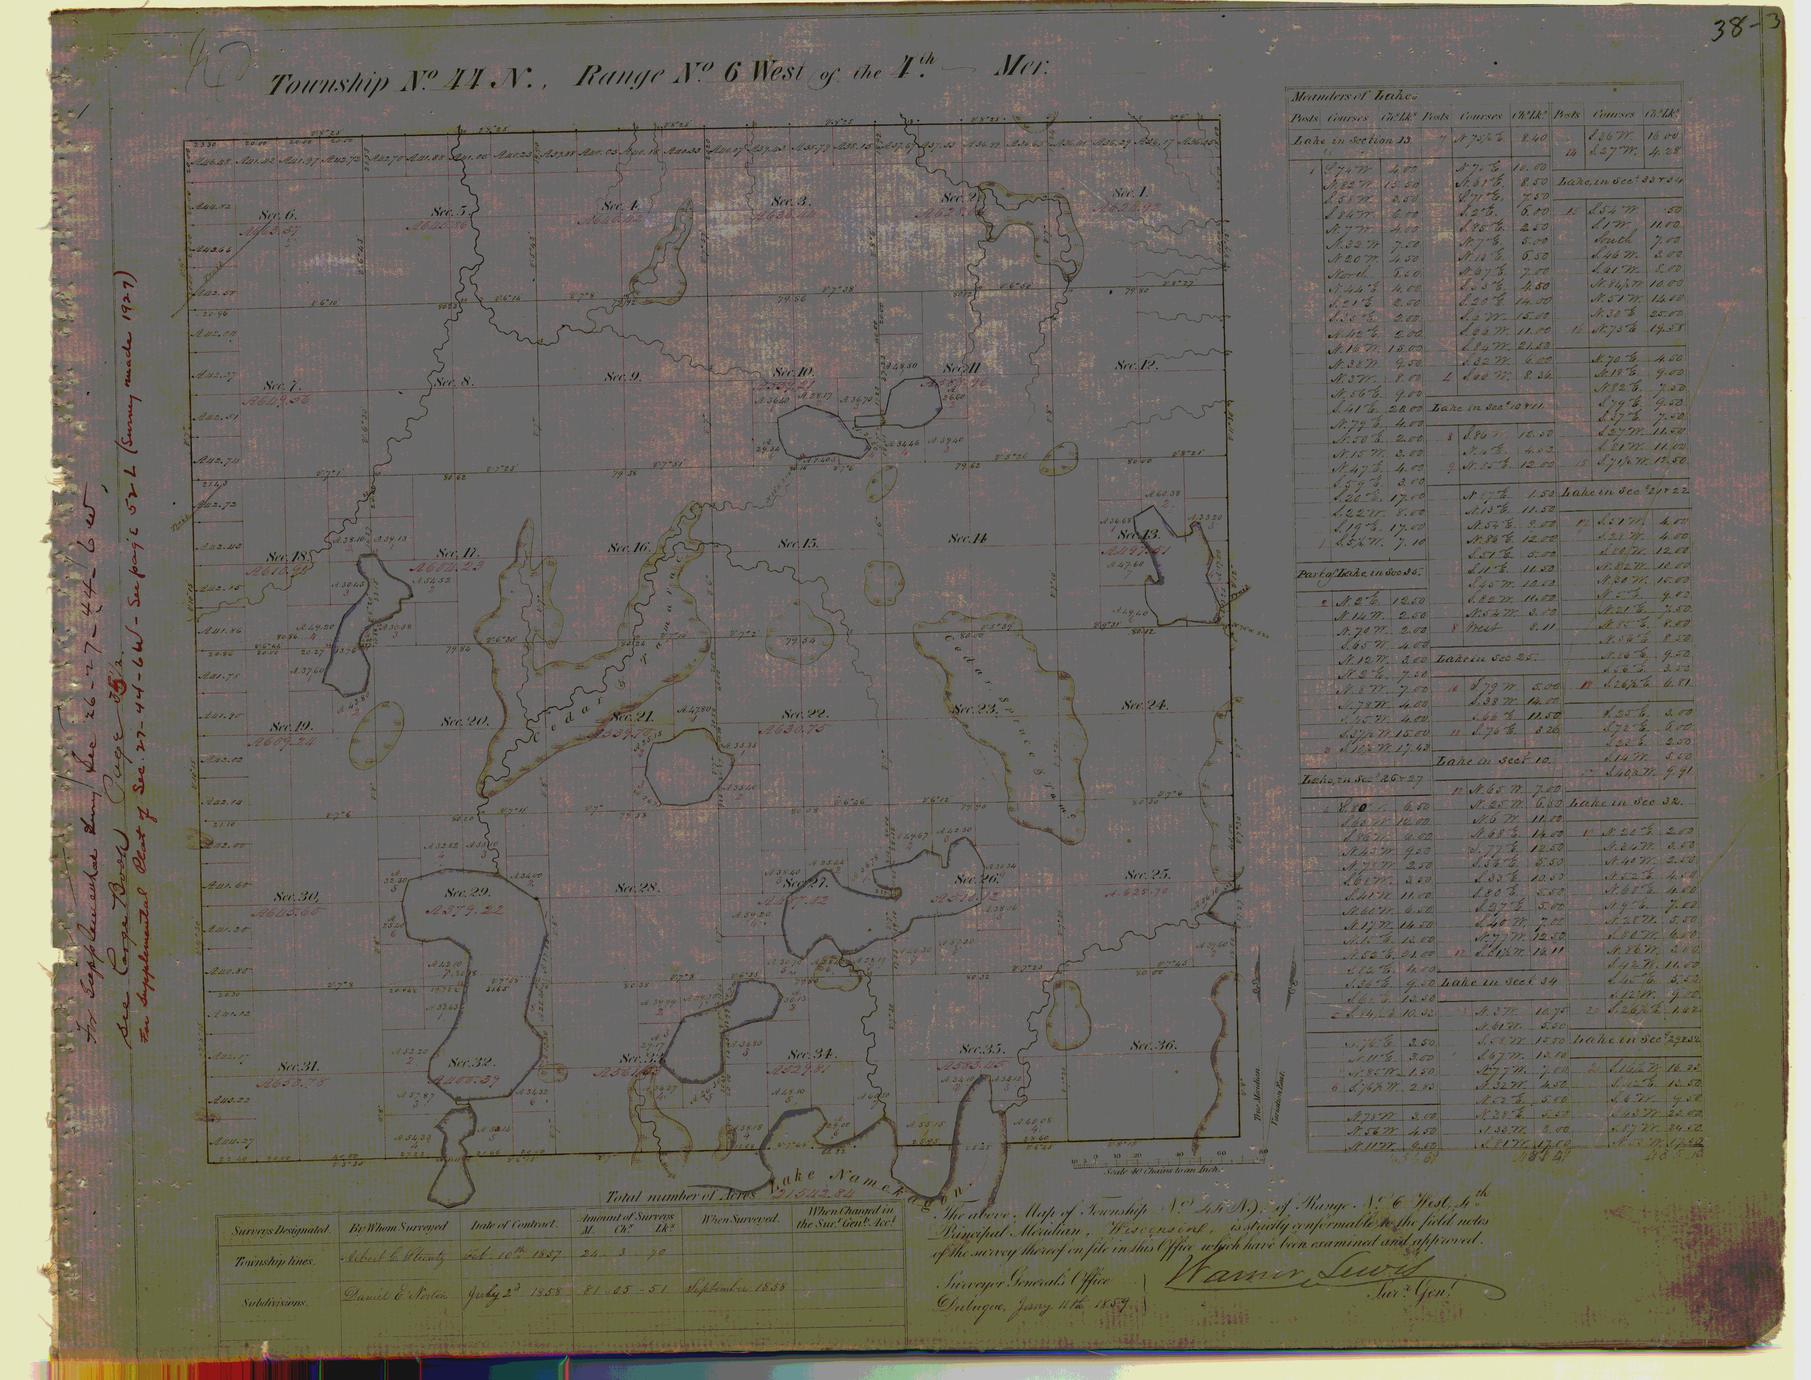 [Public Land Survey System map: Wisconsin Township 44 North, Range 06 West]